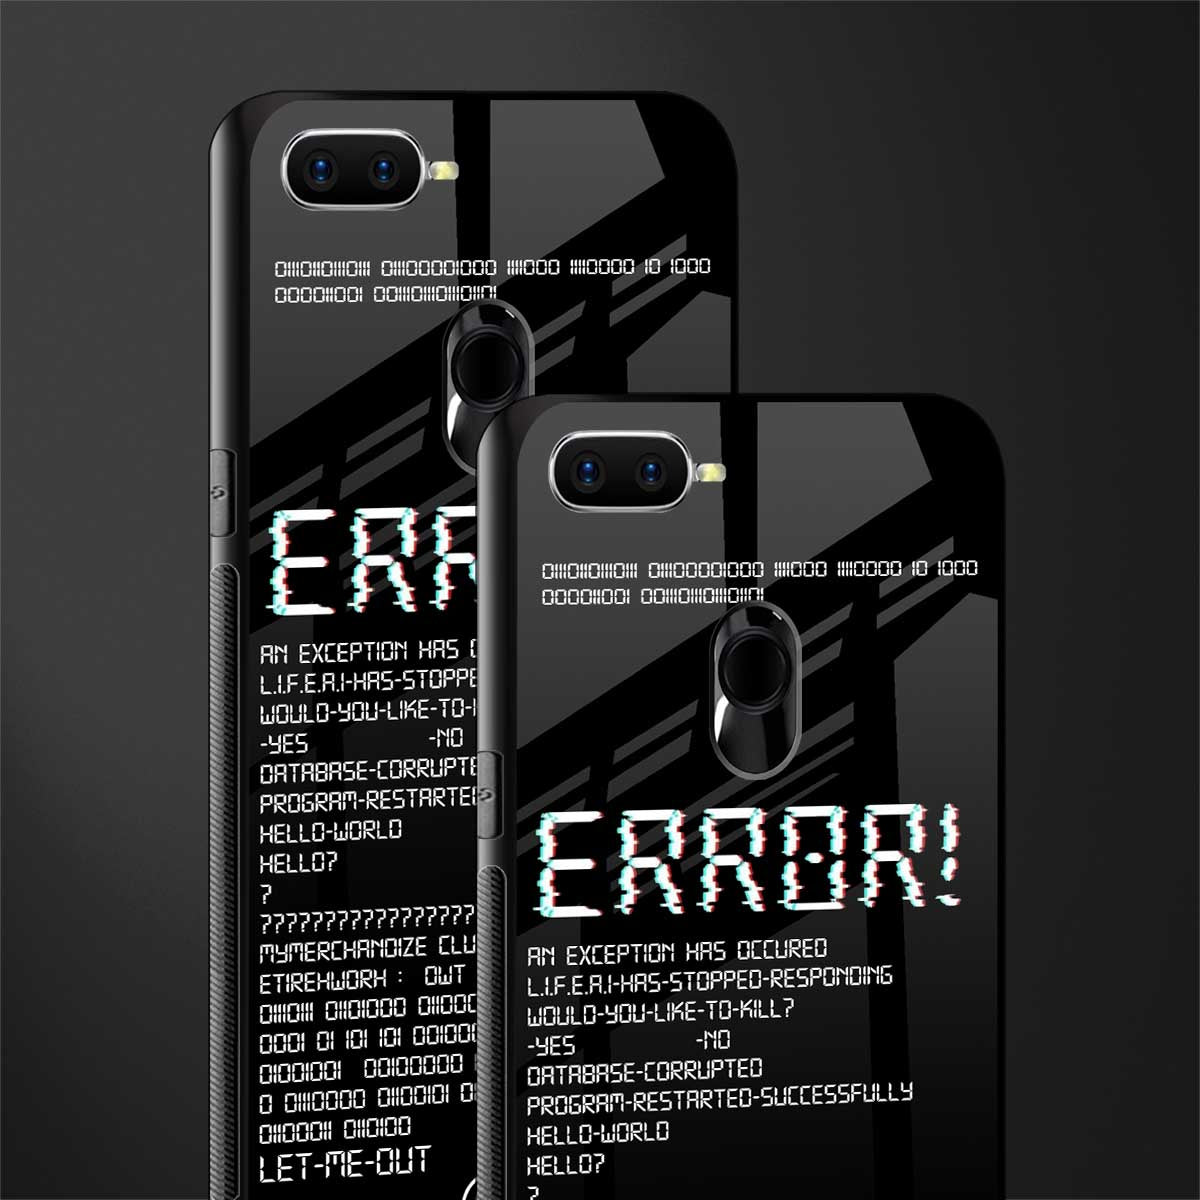 error glass case for oppo a7 image-2